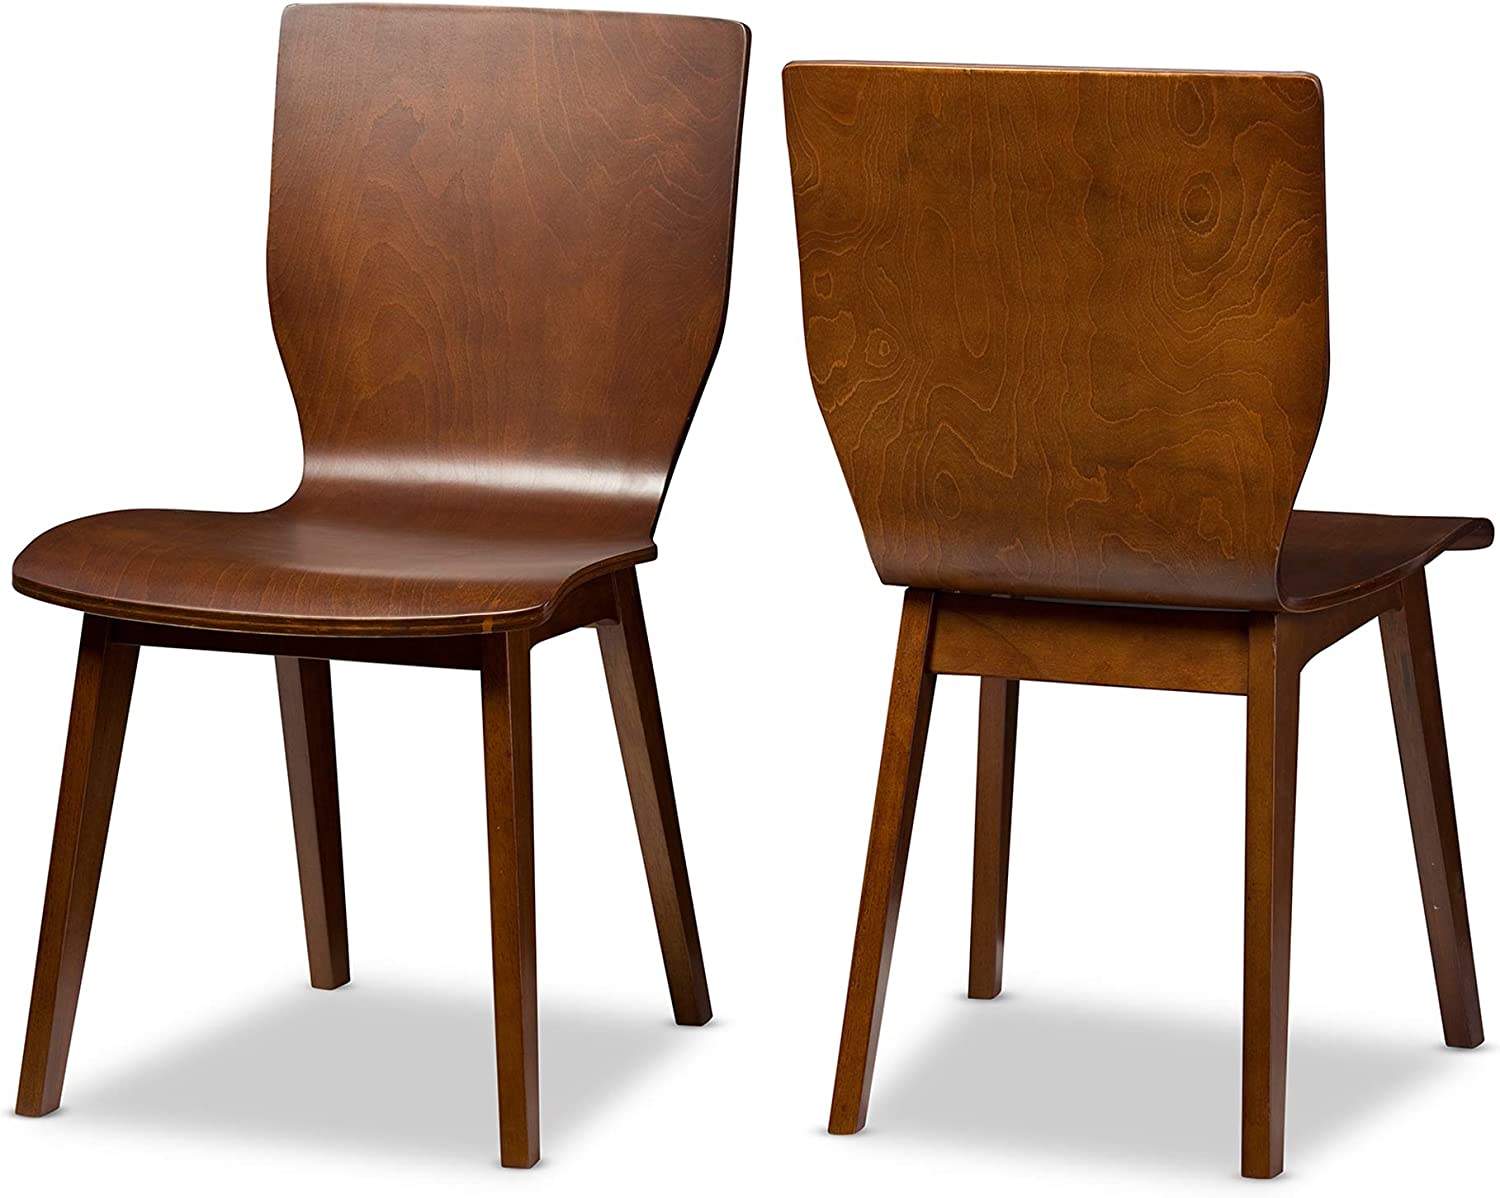 Baxton Studio Set of 2 Elsa Mid-Century Modern Scandinavian Style Bent Wood Dining Side Chairs Dark Walnut